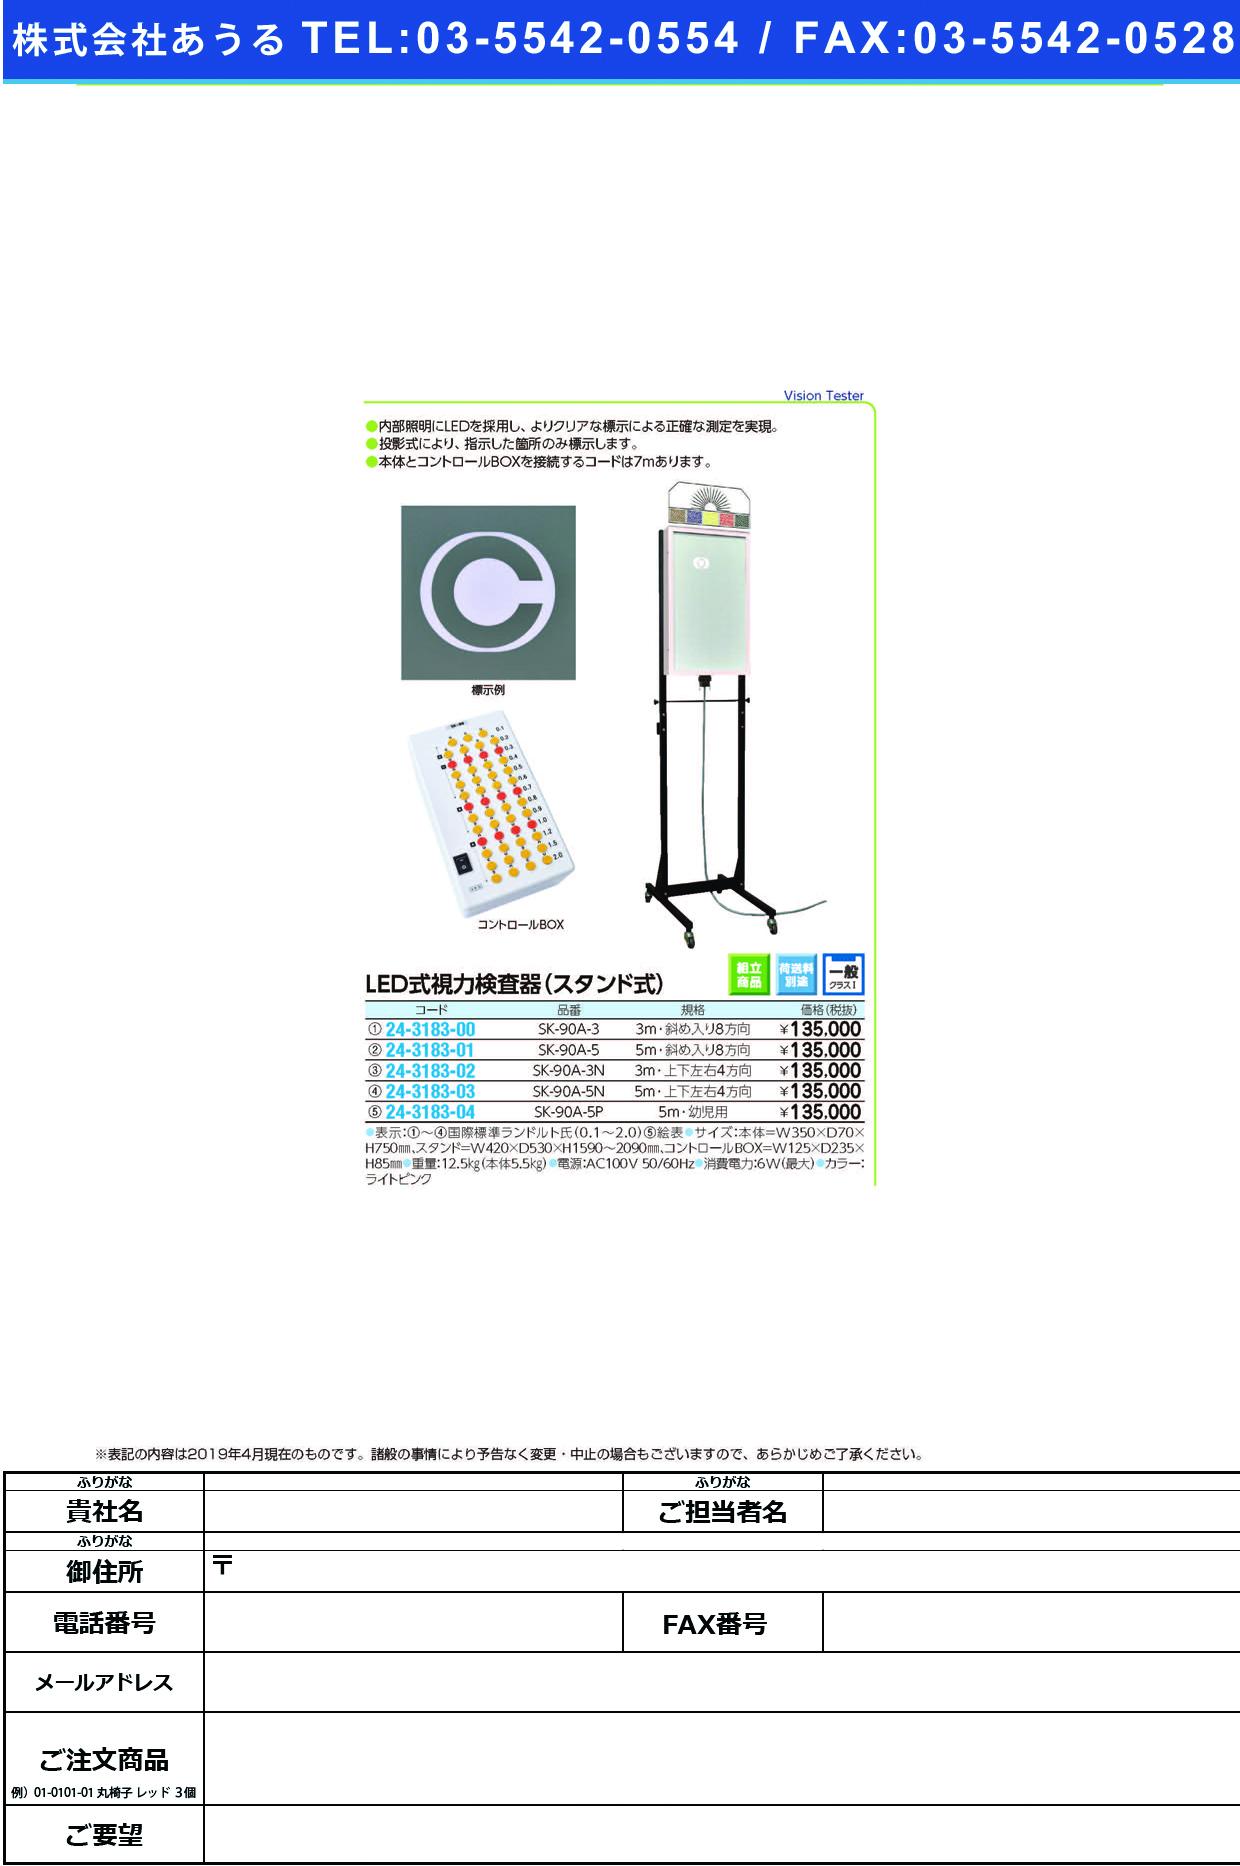 (24-3183-03)ＬＥＤ式視力検査器（スタンド式５ｍ用 SK-90A-5N(4ﾎｳｺｳ) LEDｼｷｼﾘｮｸｹﾝｻｷｽﾀﾝﾄﾞｼｷ【1台単位】【2019年カタログ商品】